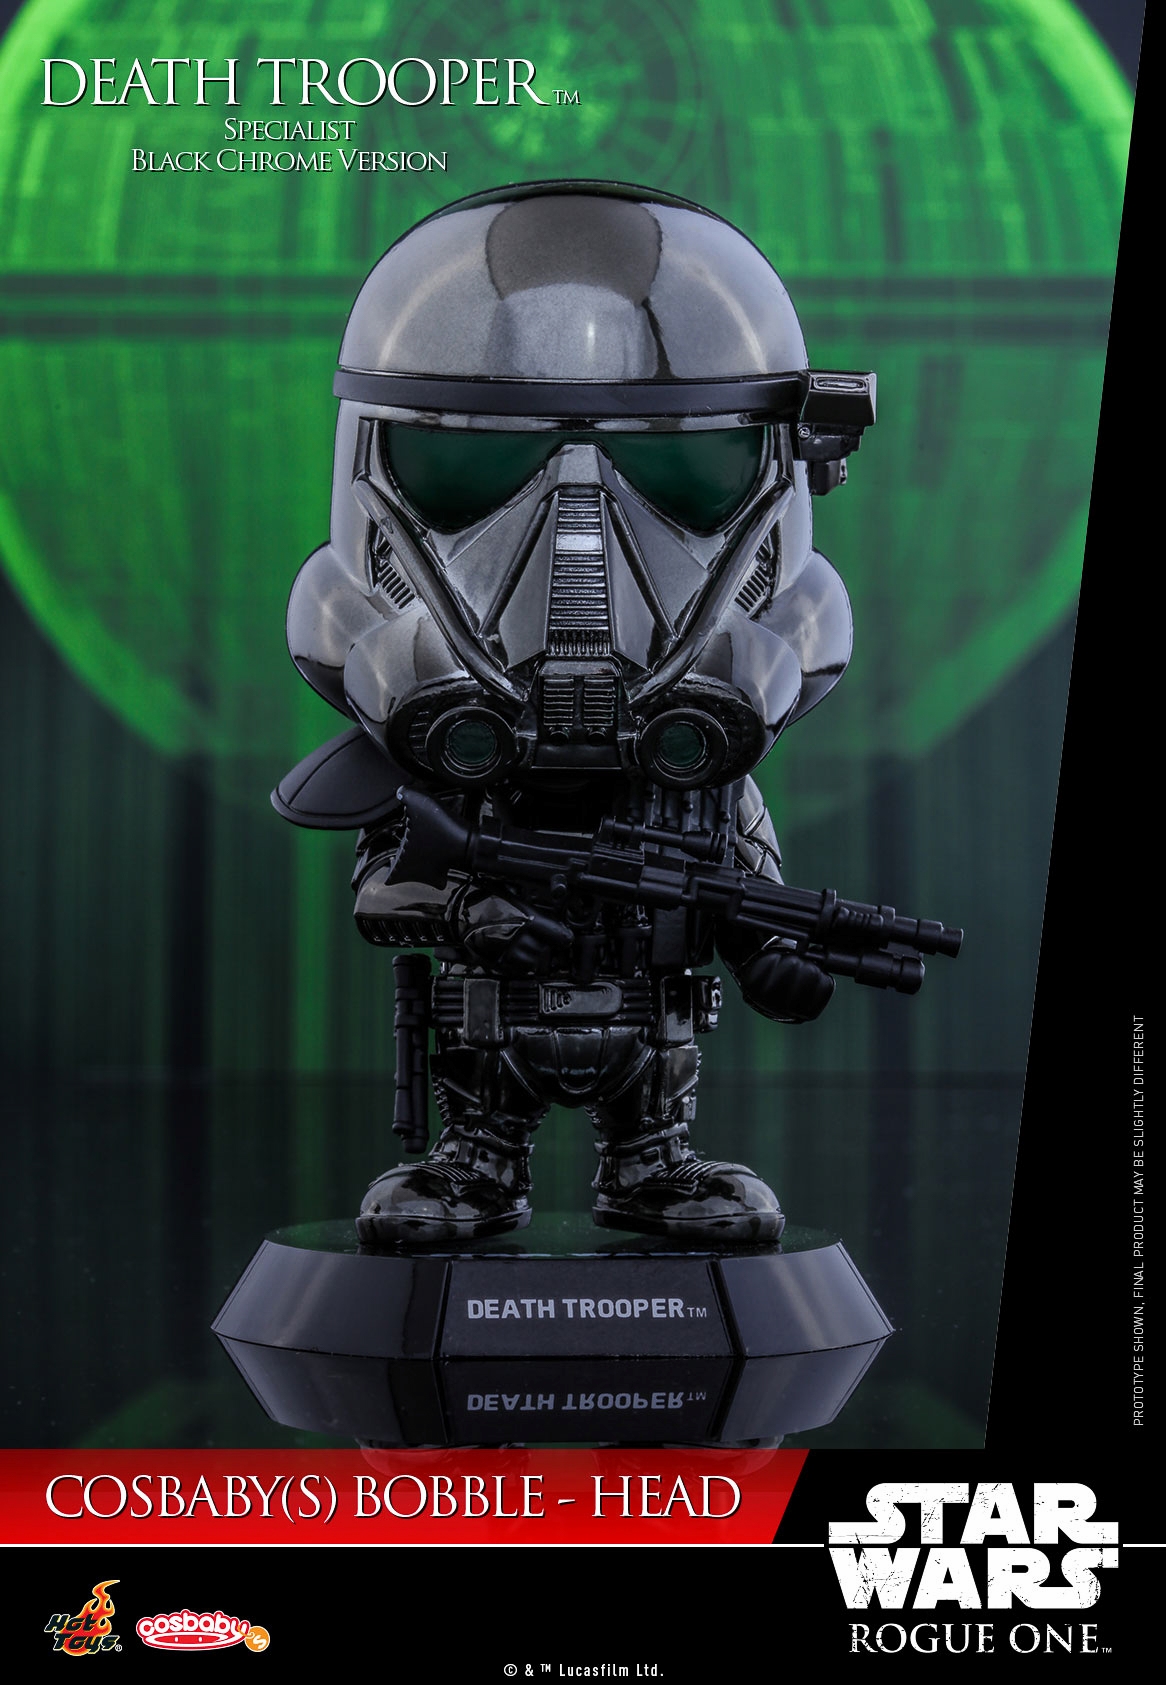 Hot-Toys-COSB341-Death-Trooper-Specialist-Black-Chrome-006.jpg